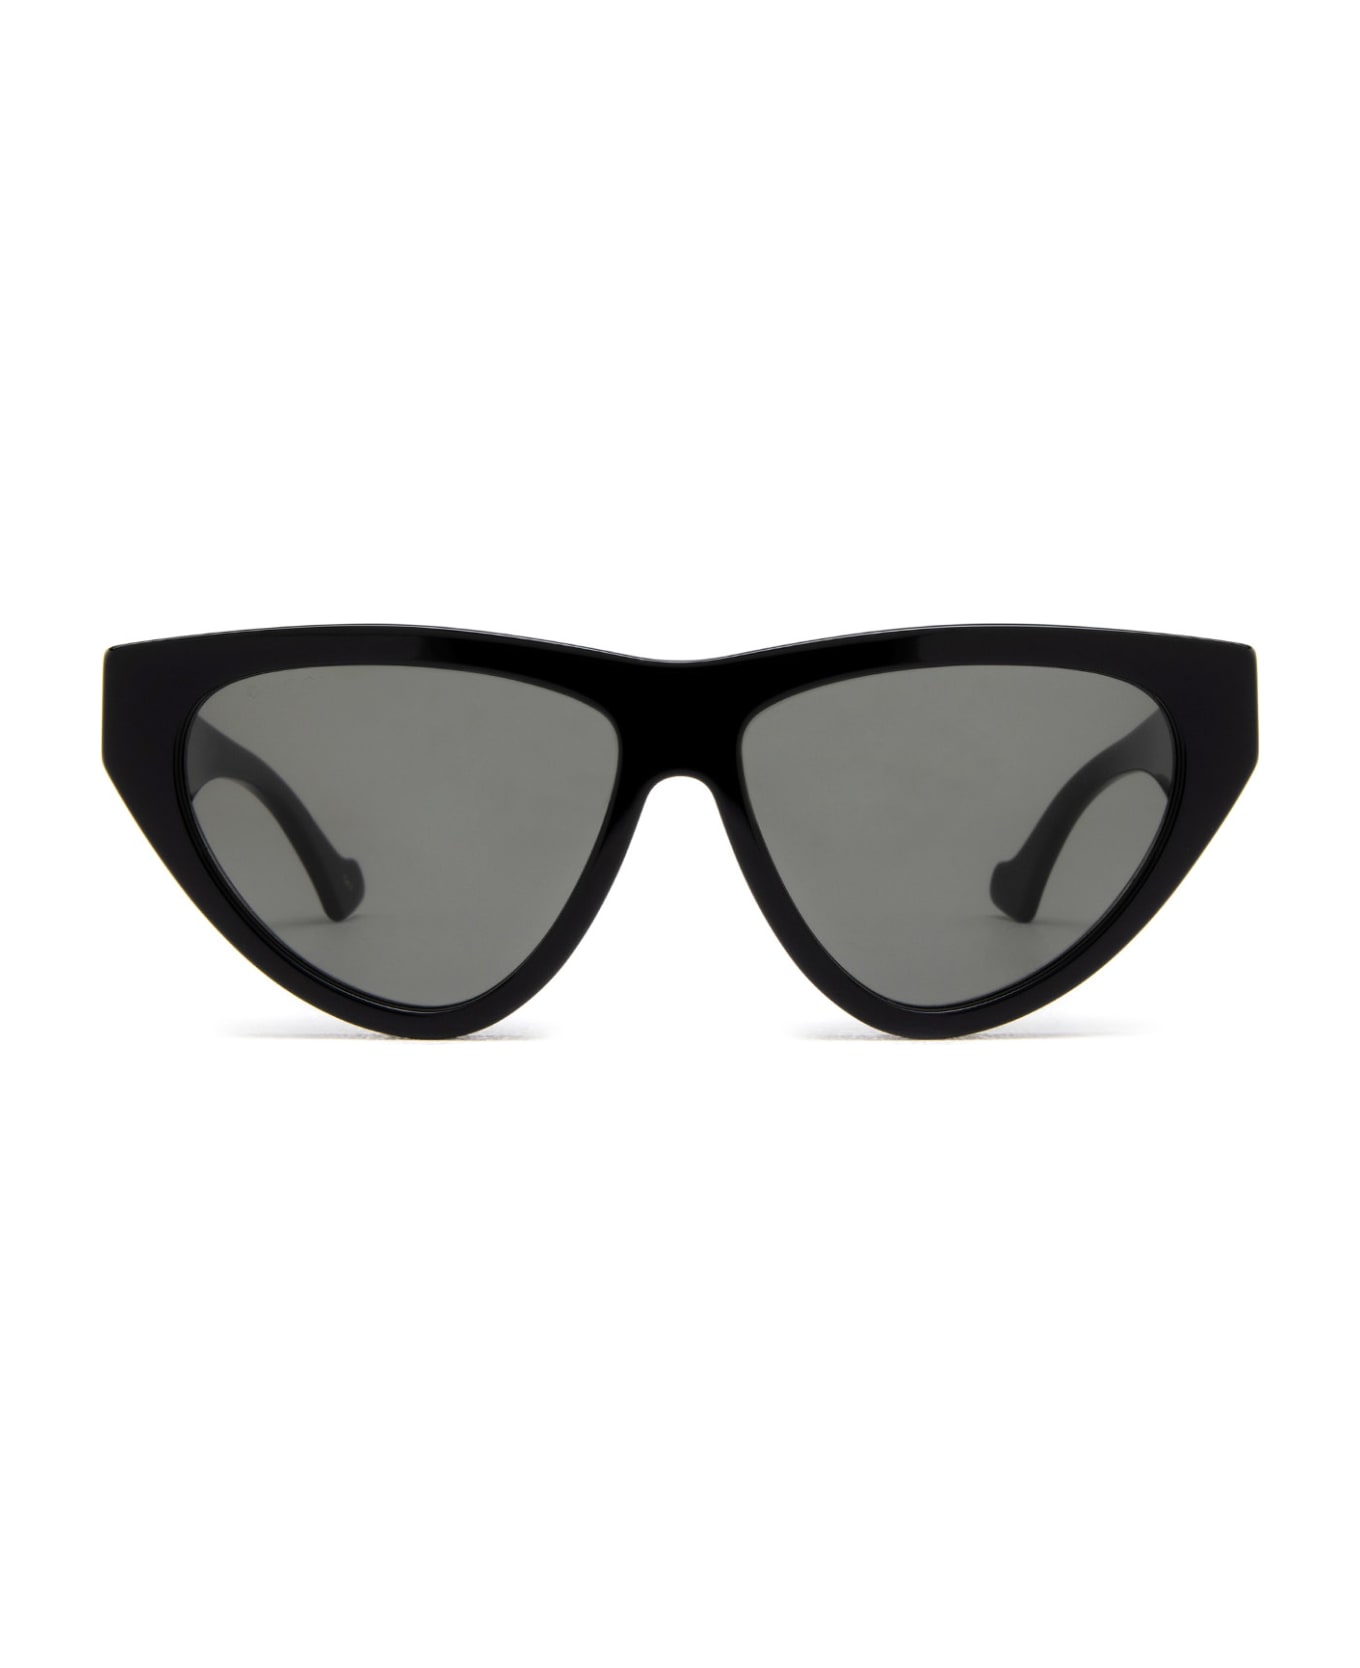 Gucci Eyewear Gg1333s Black Sunglasses - Black